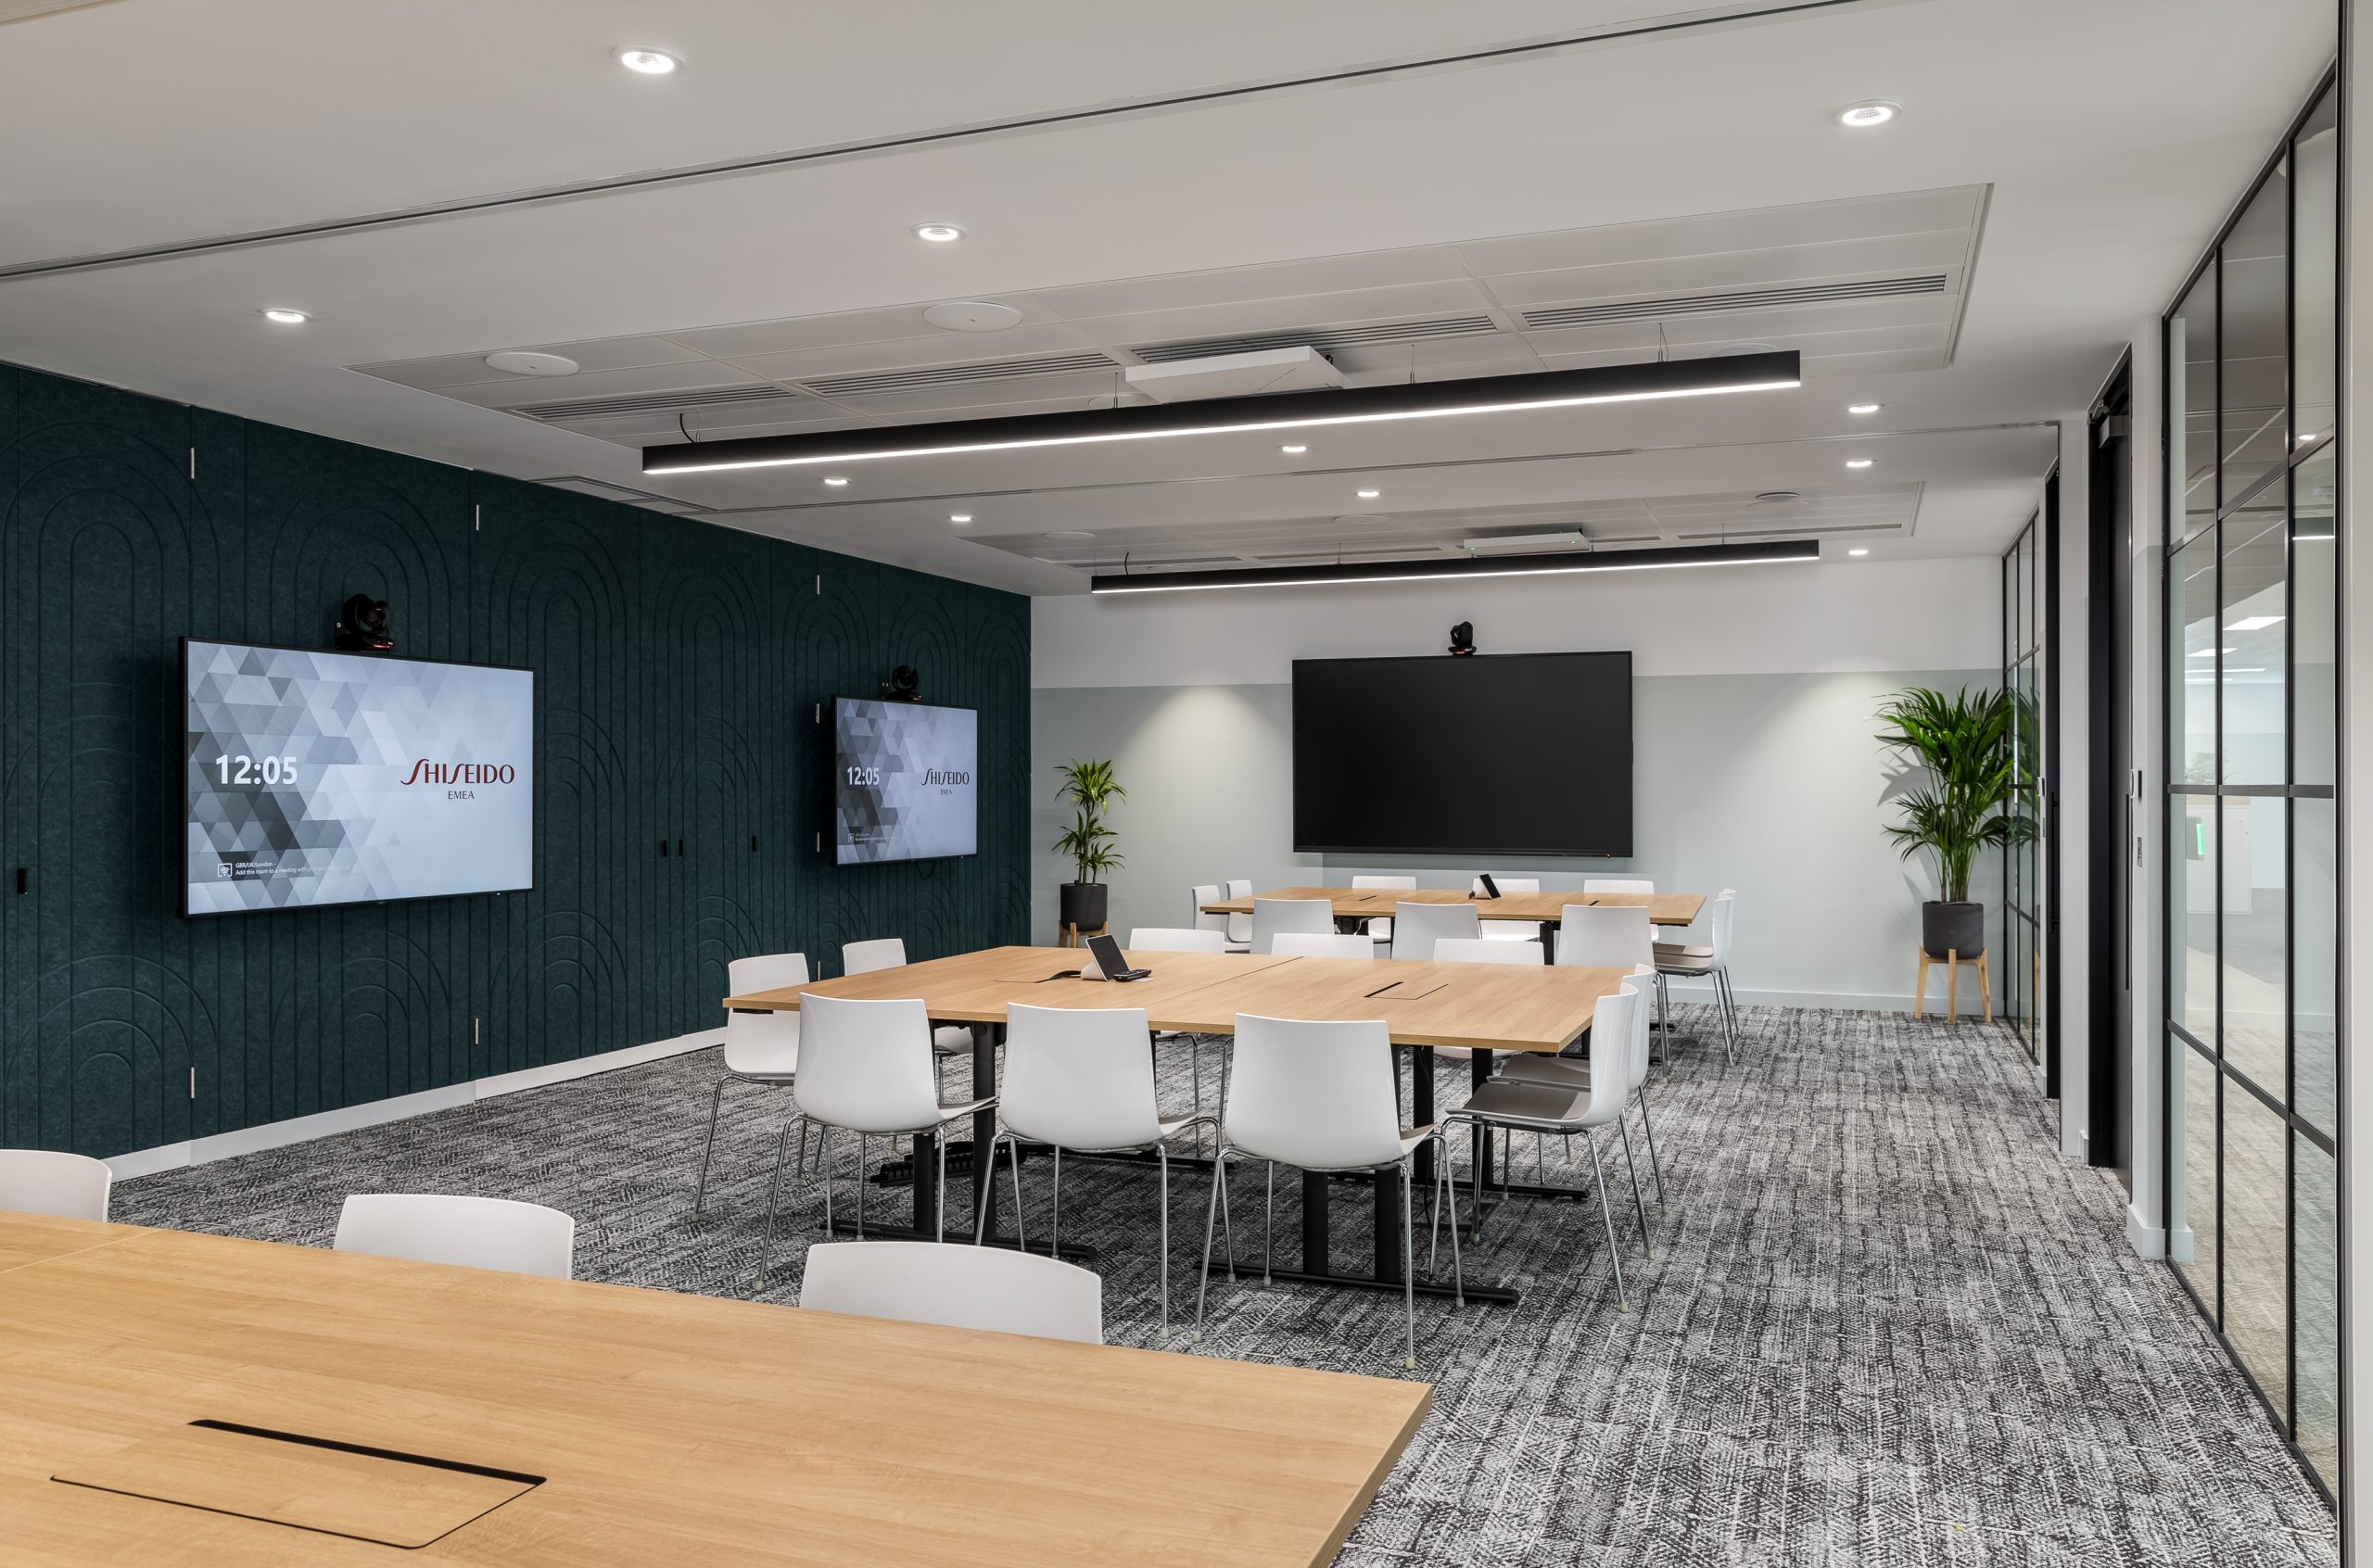 An image showing AV solutions in an open split meeting room